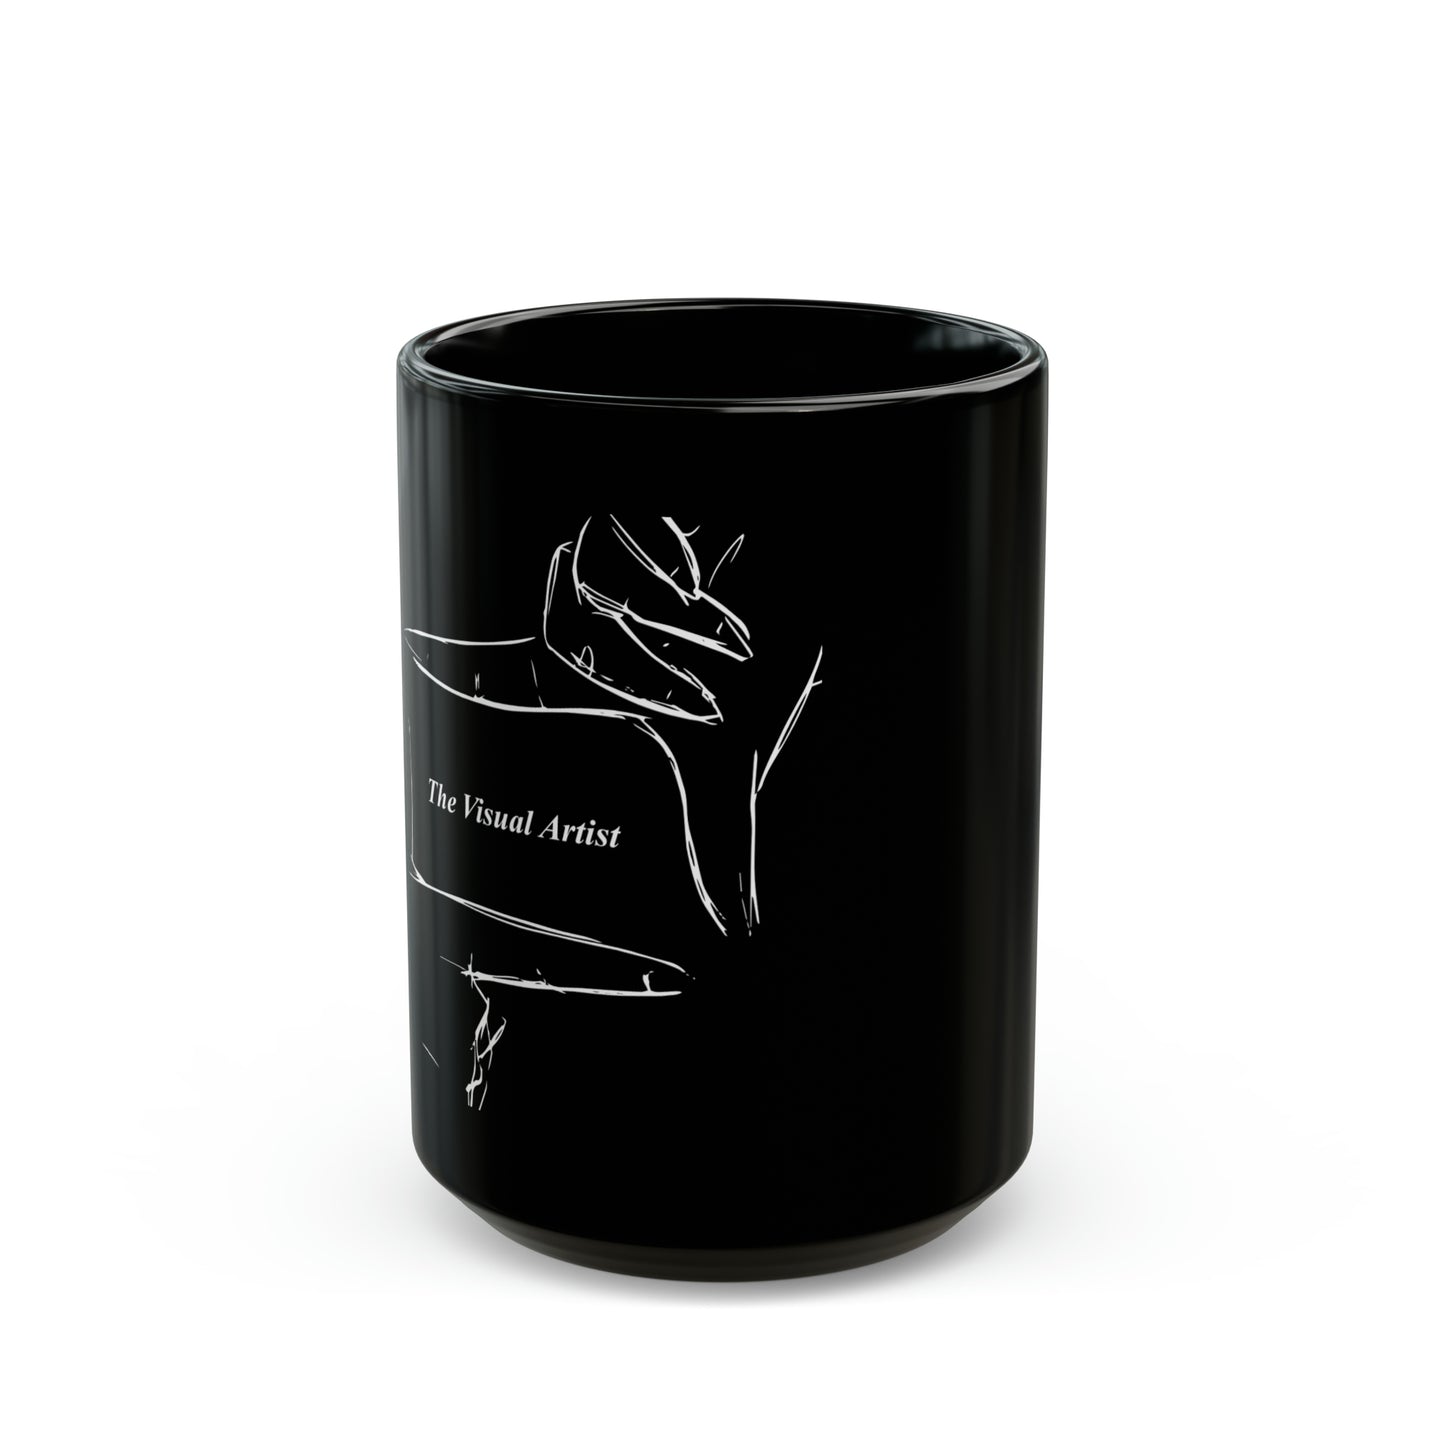 "the visual artist" coffee mug